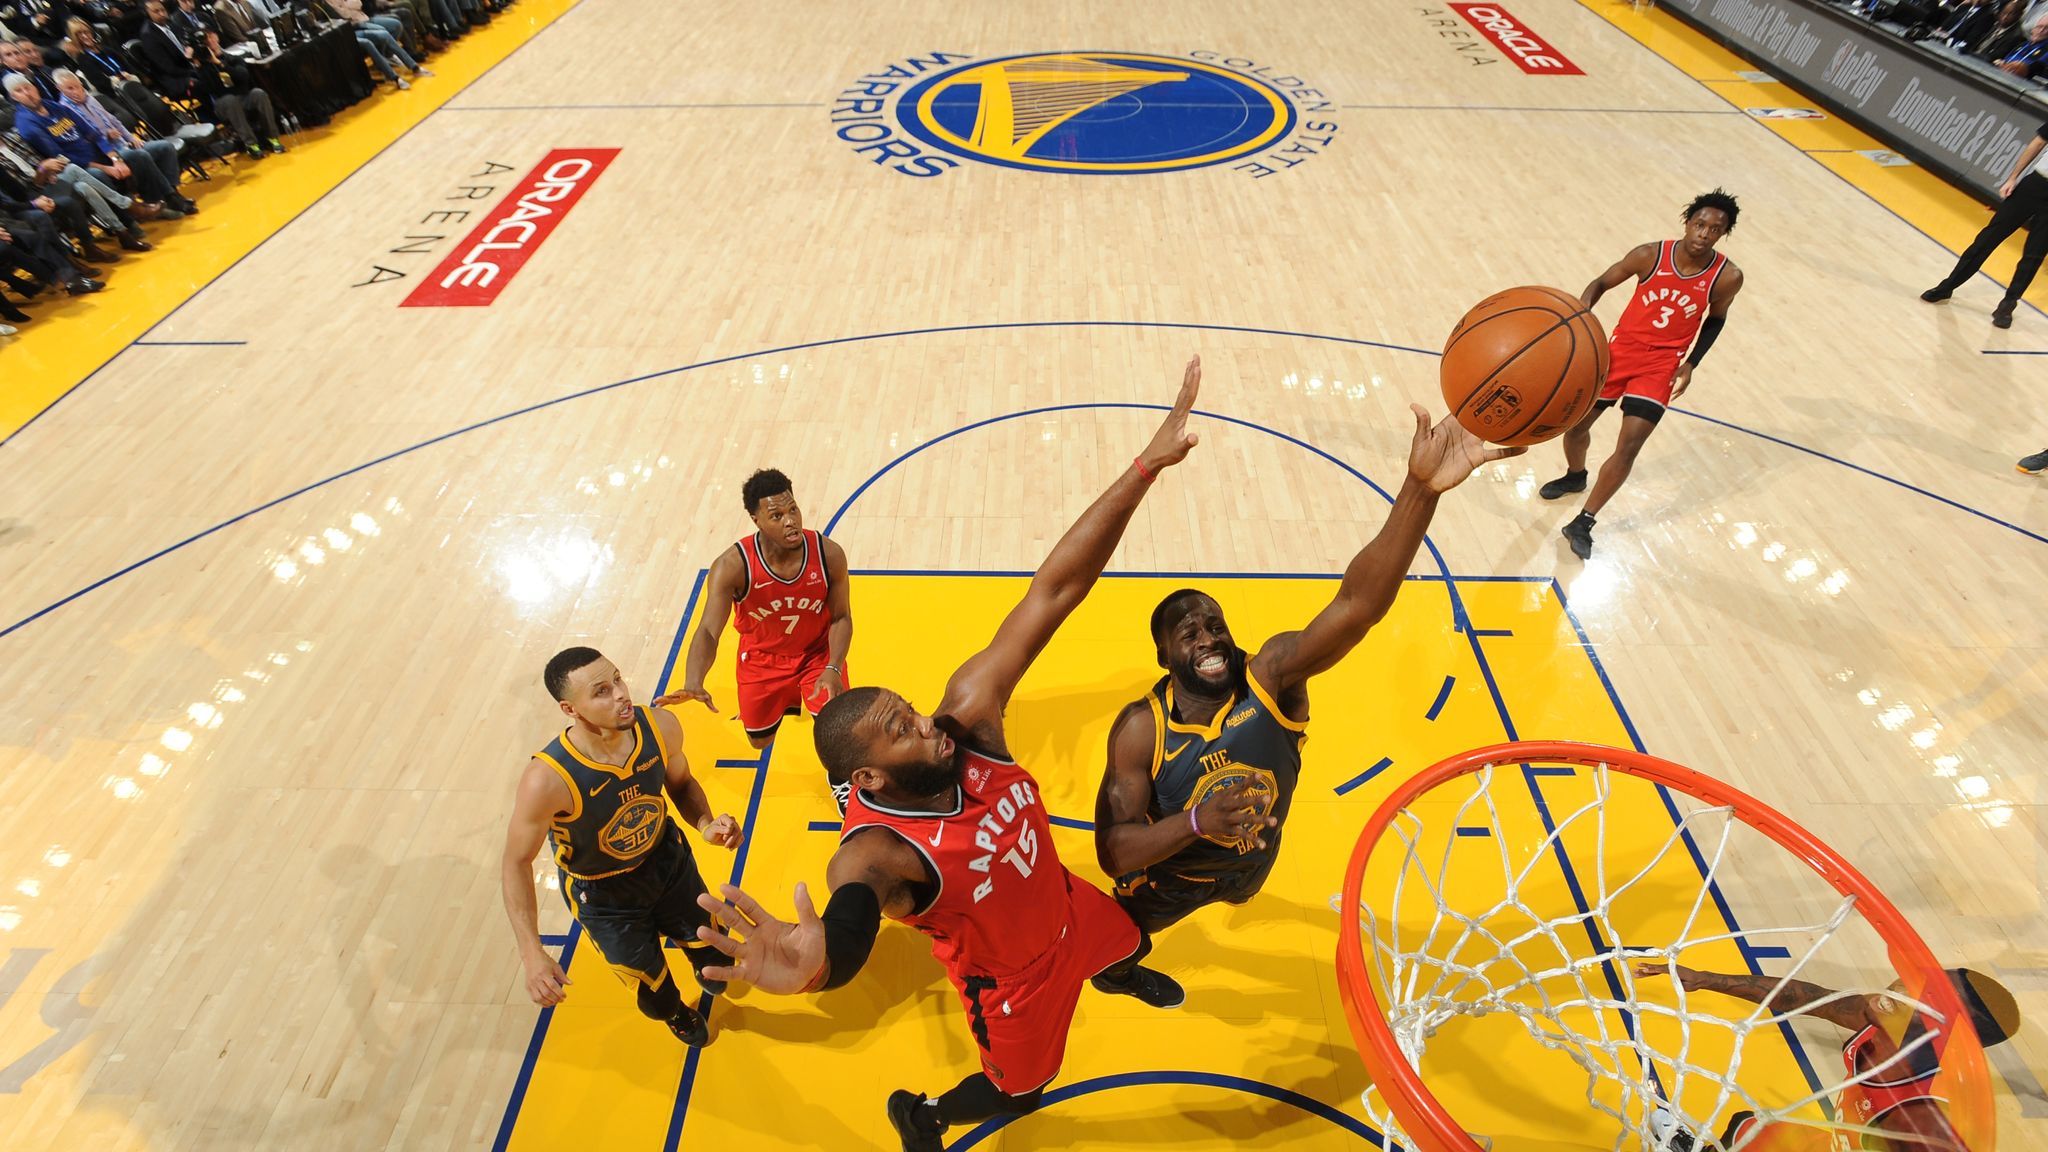 Raptors, Warriors set for historic matchup in 2019 NBA Finals